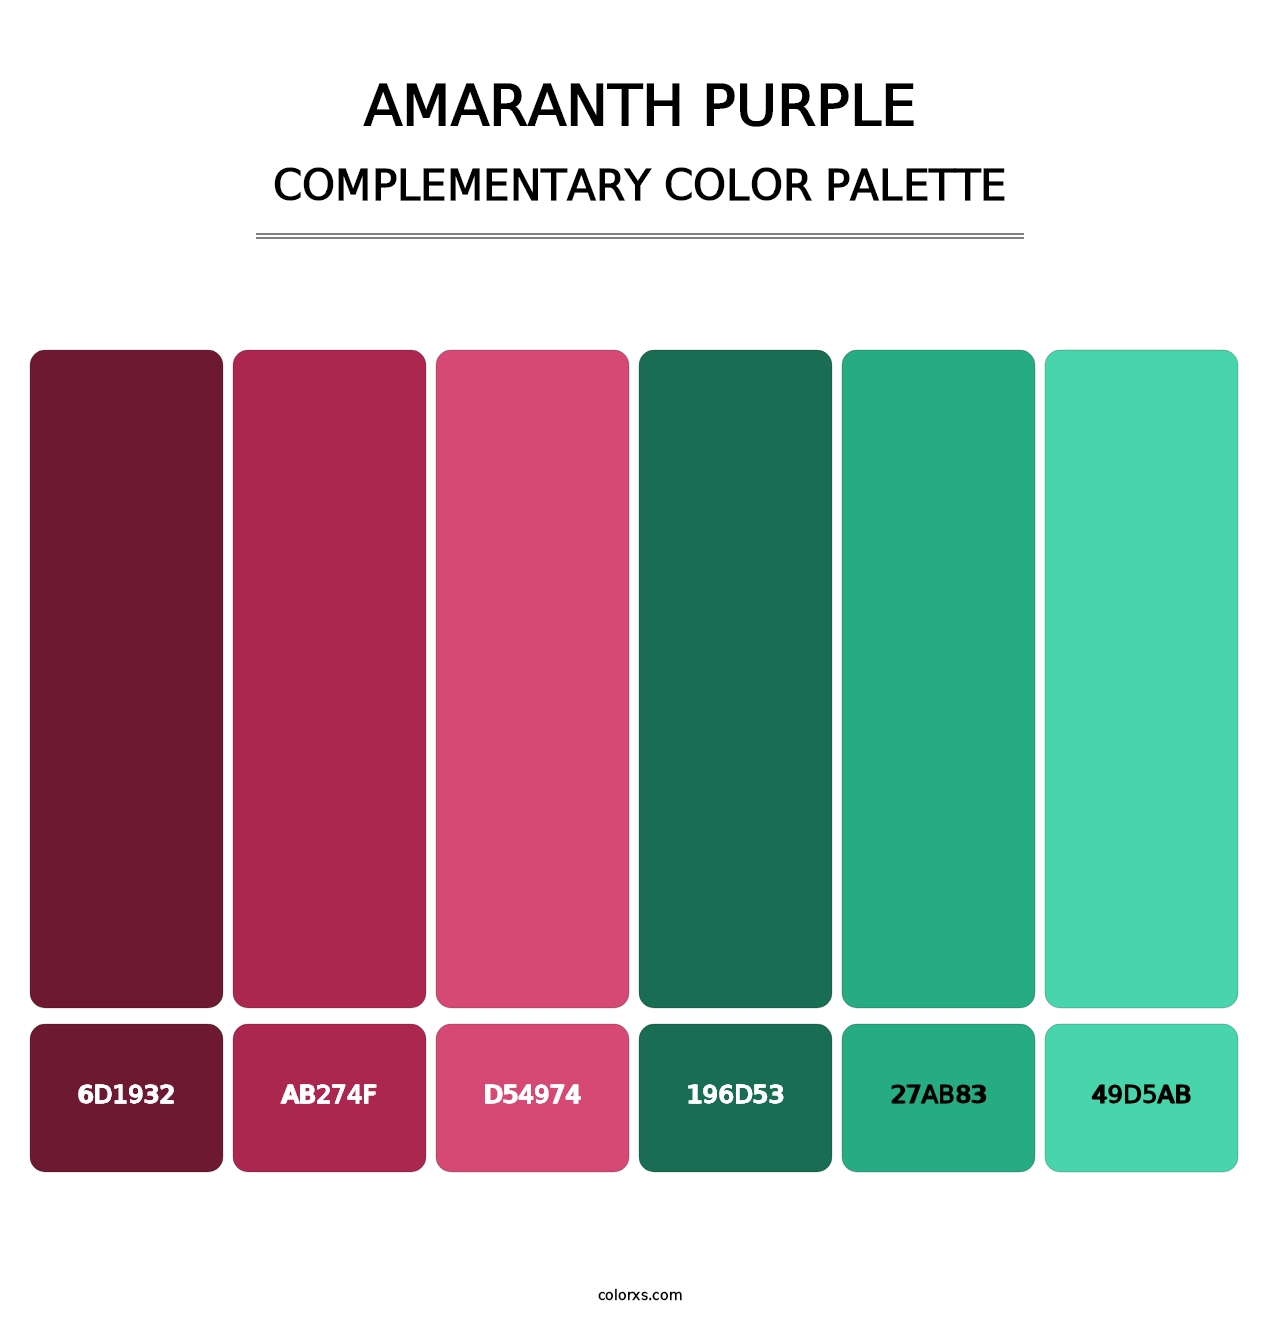 Amaranth Purple - Complementary Color Palette